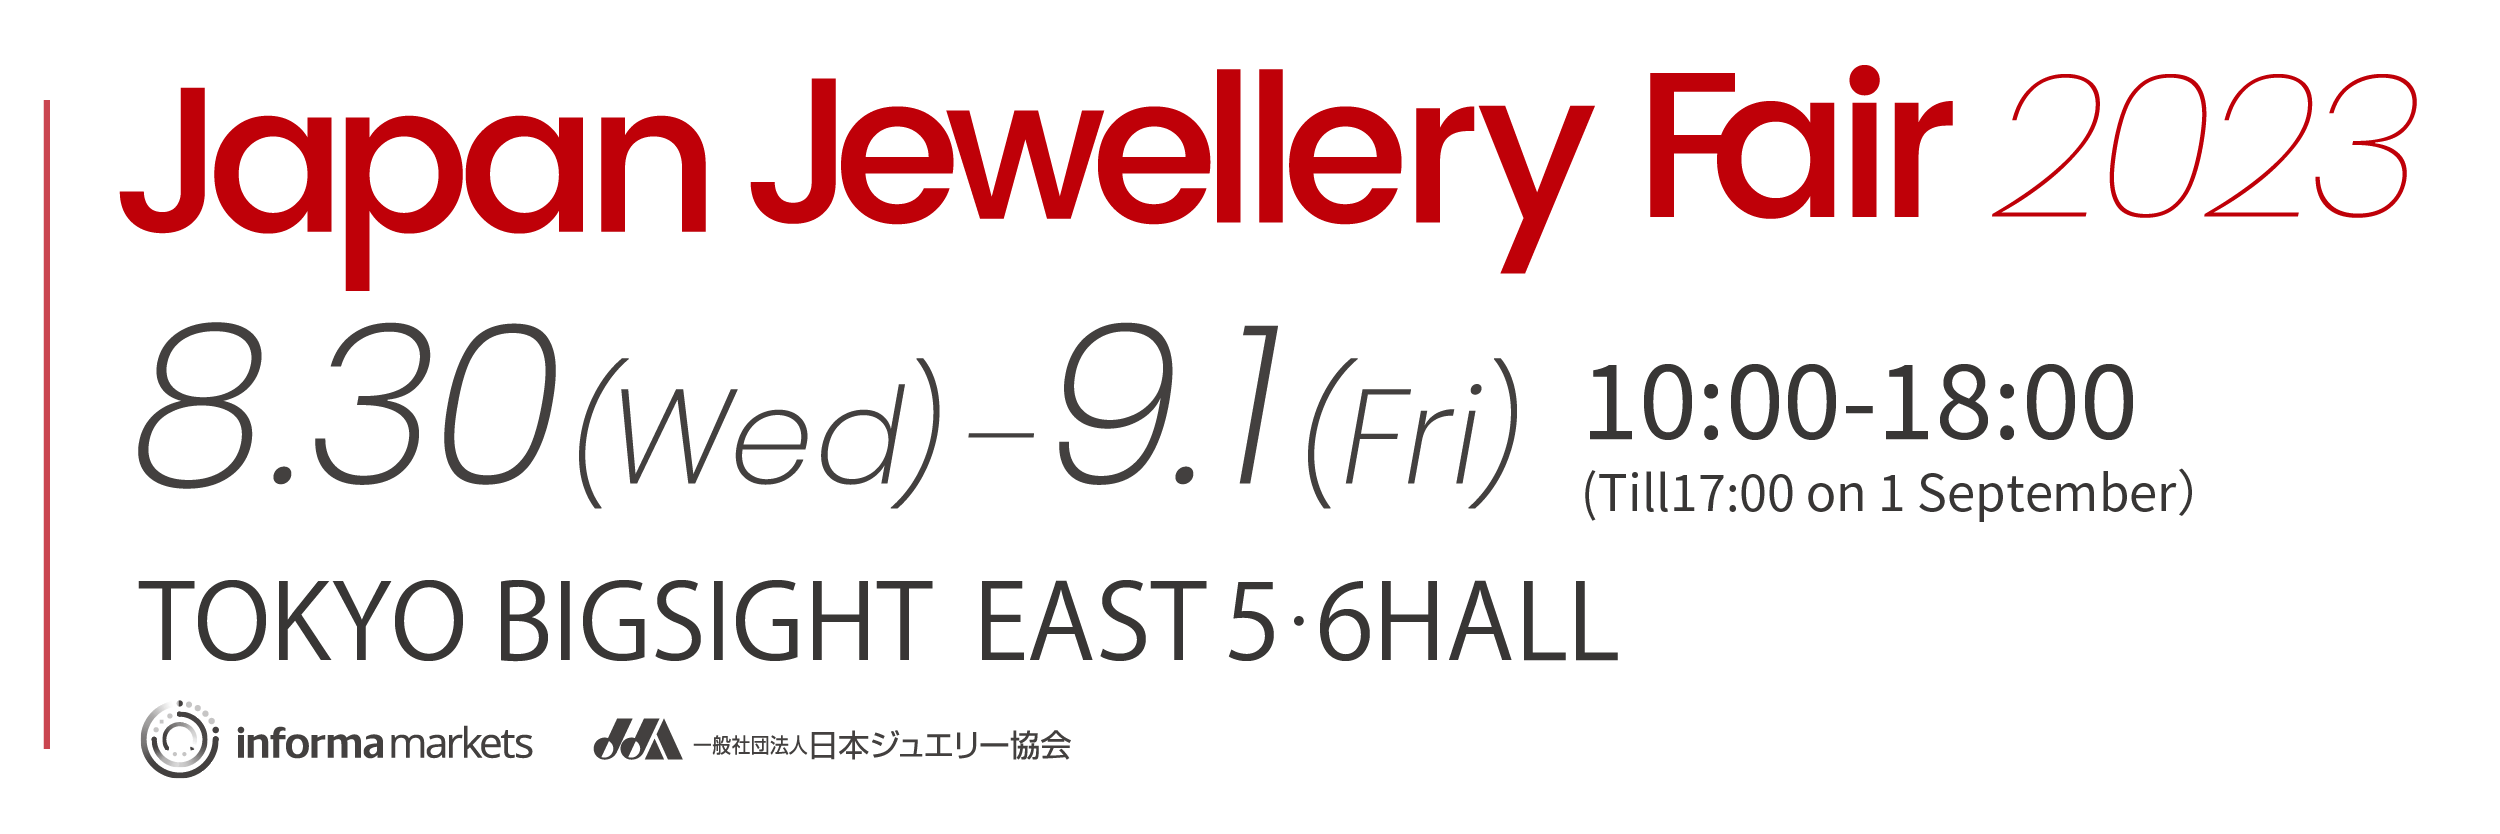 Japan Jewellery Fair  30 August- 1 September 2023